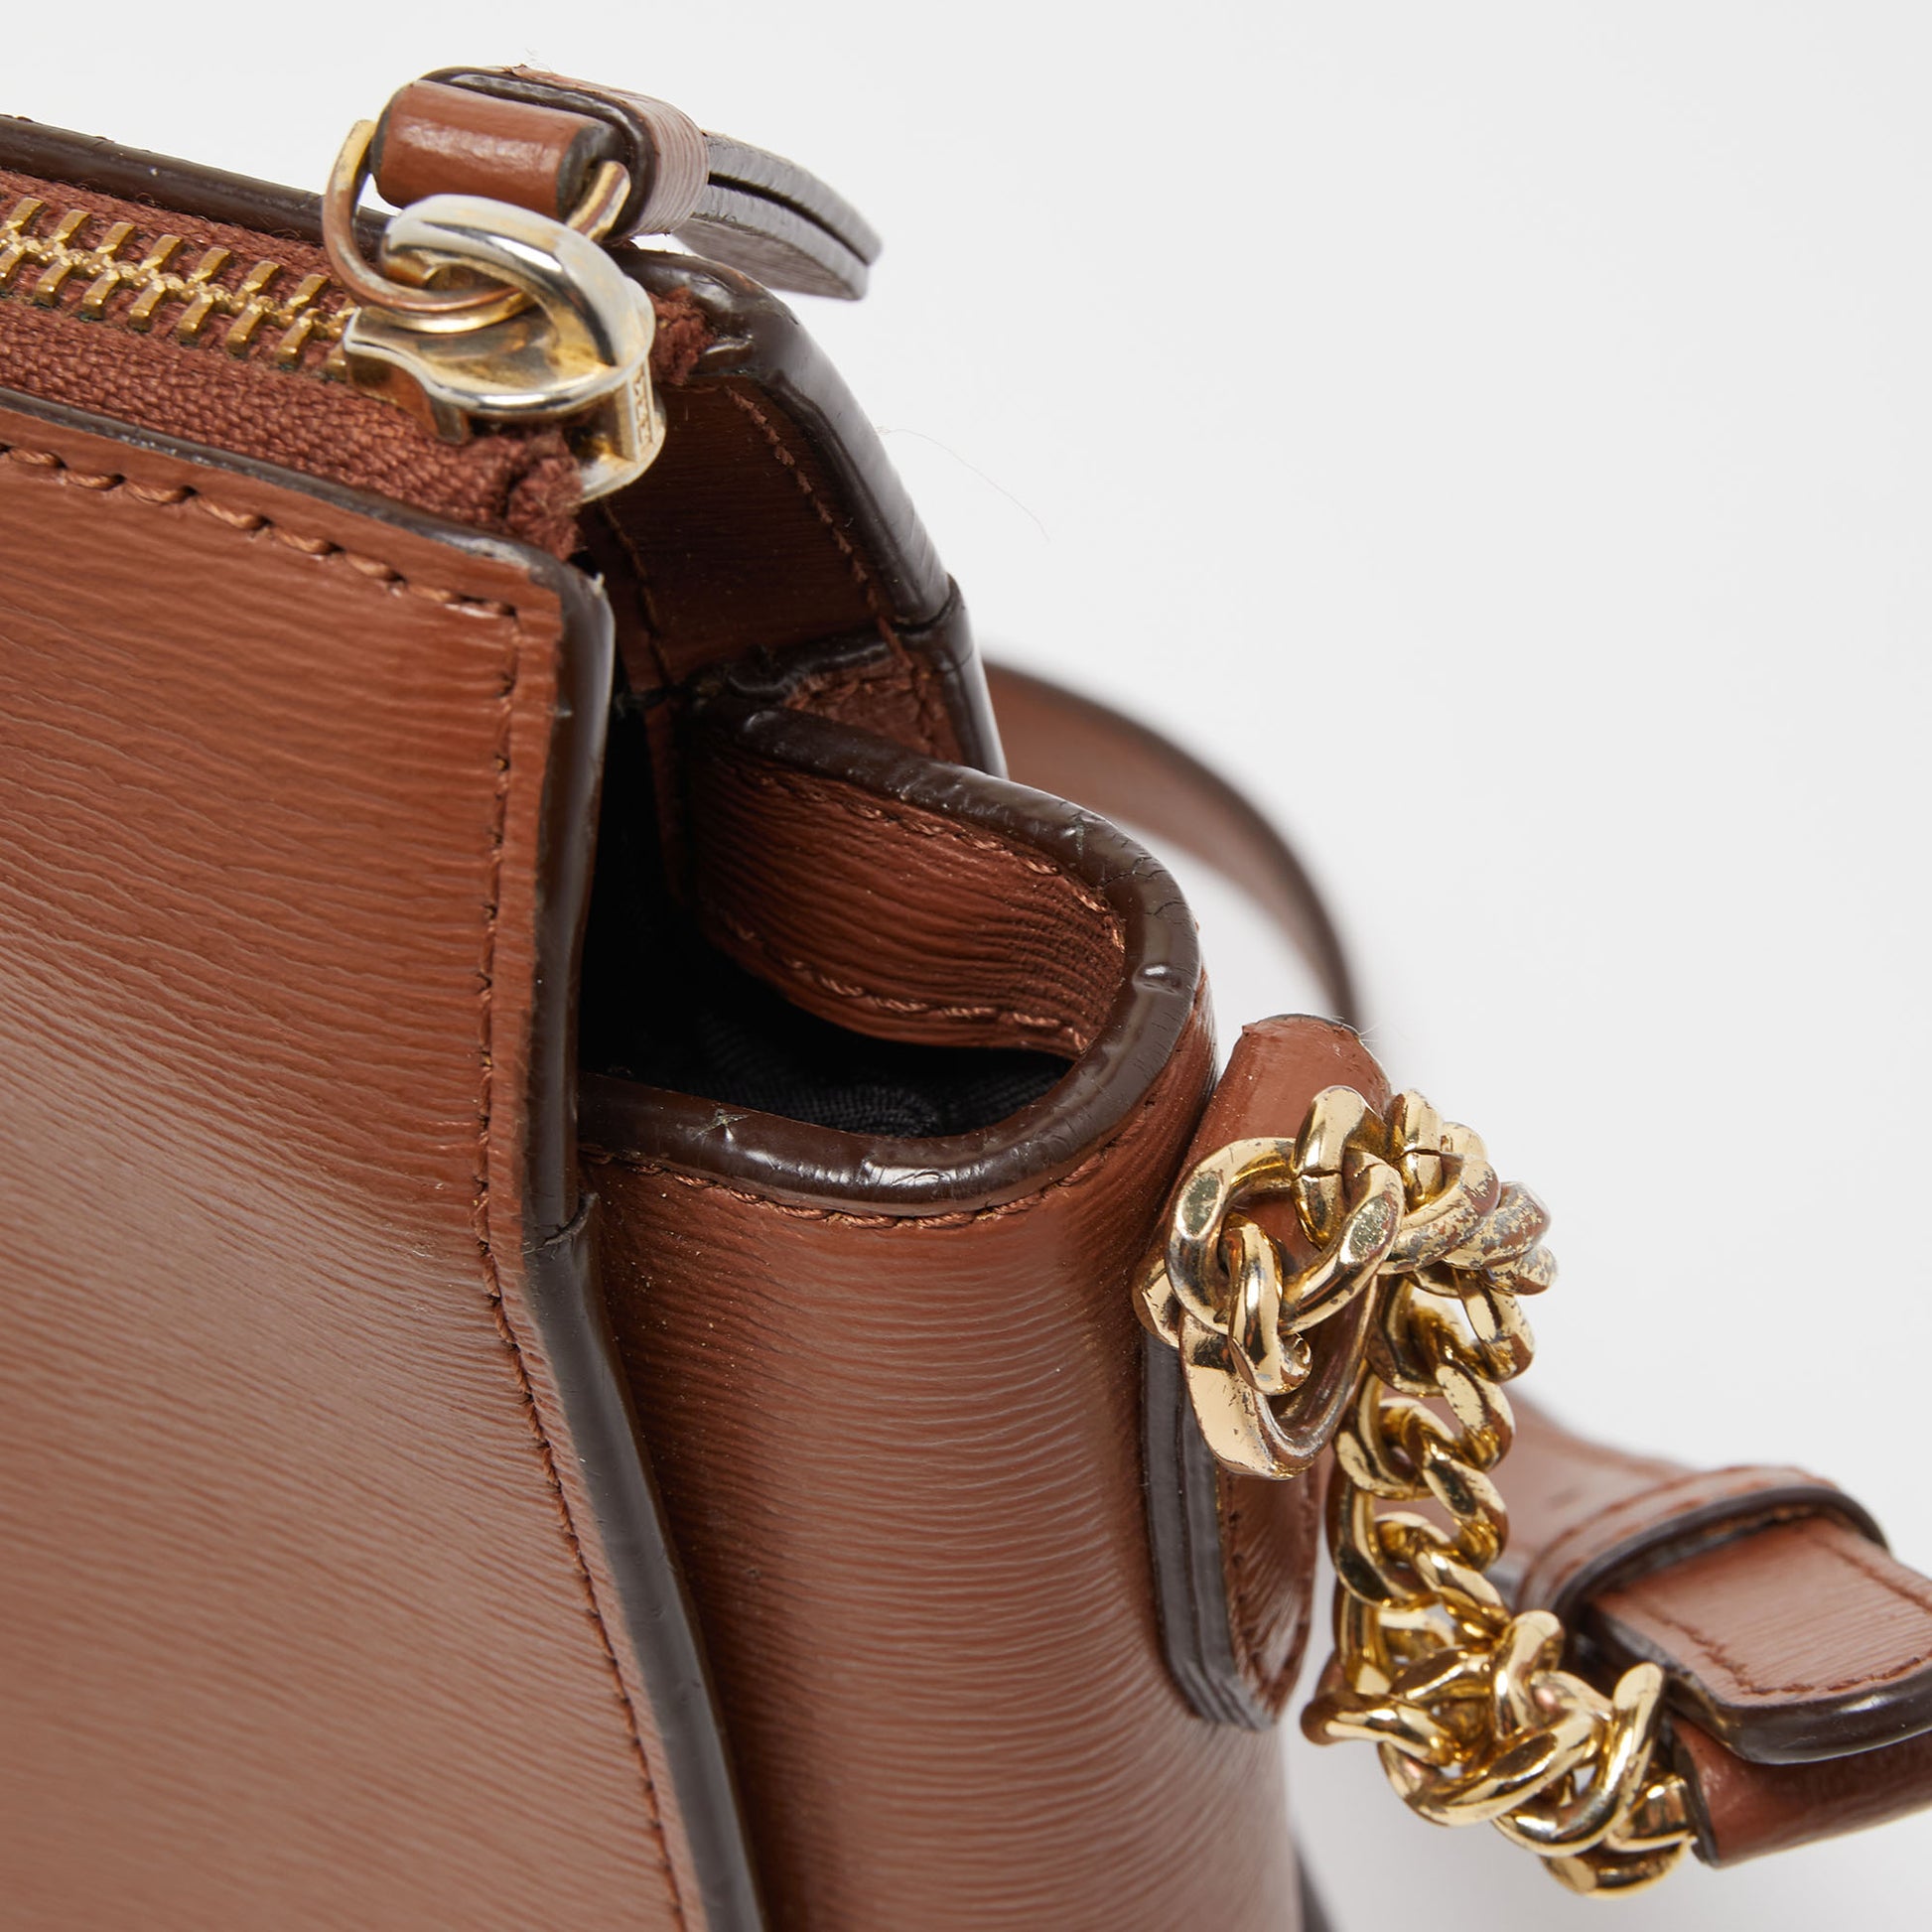 Dkny Brown Leather Ava Zip Crossbody Bag